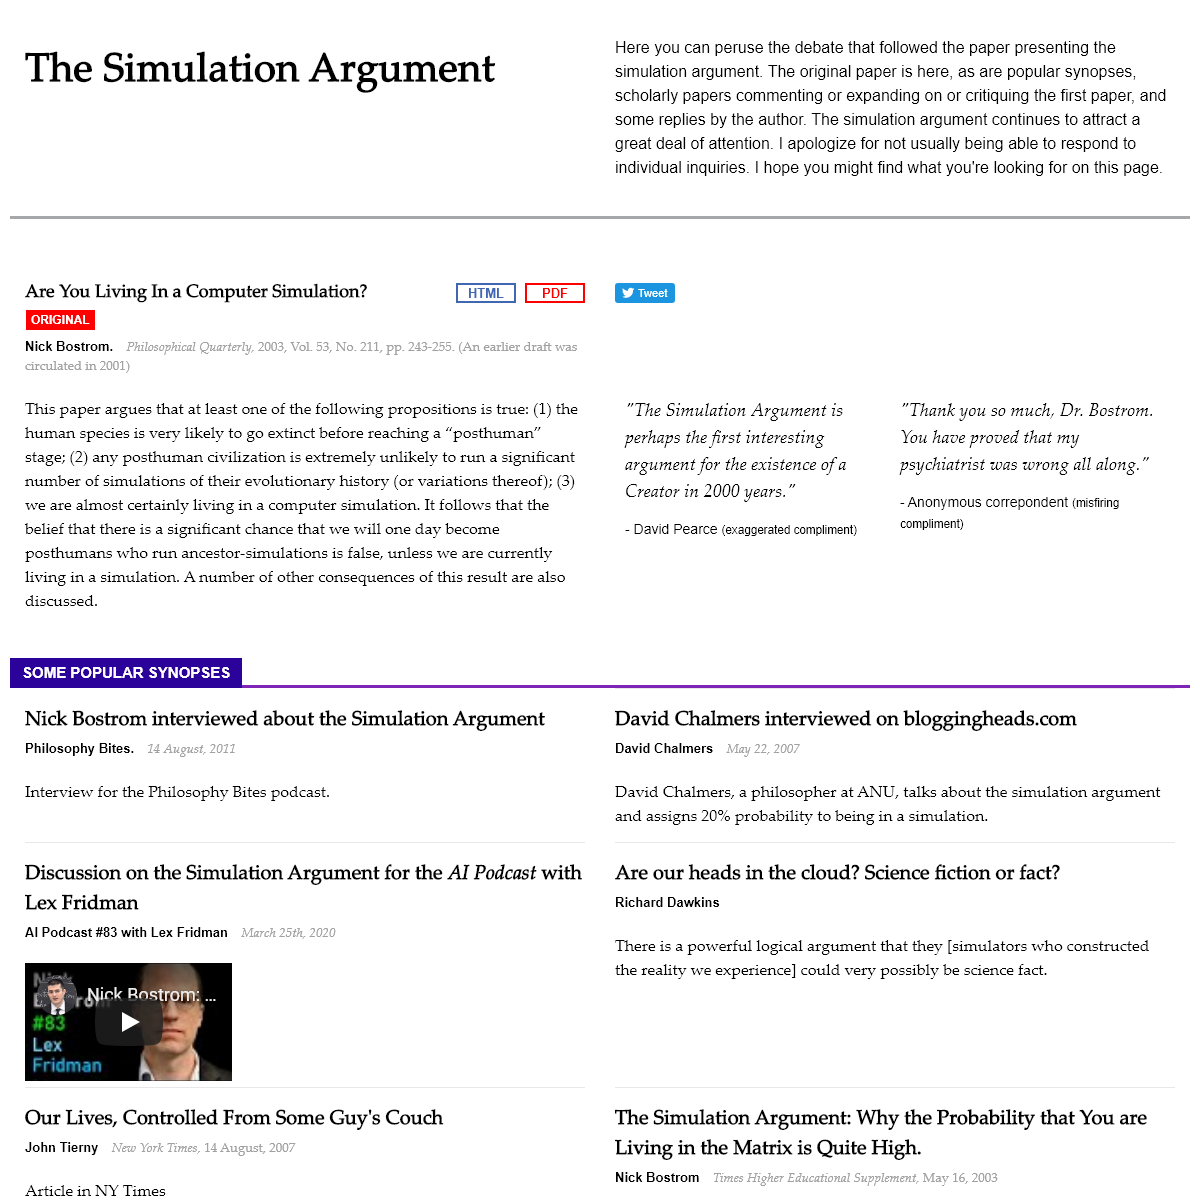 A complete backup of simulation-argument.com